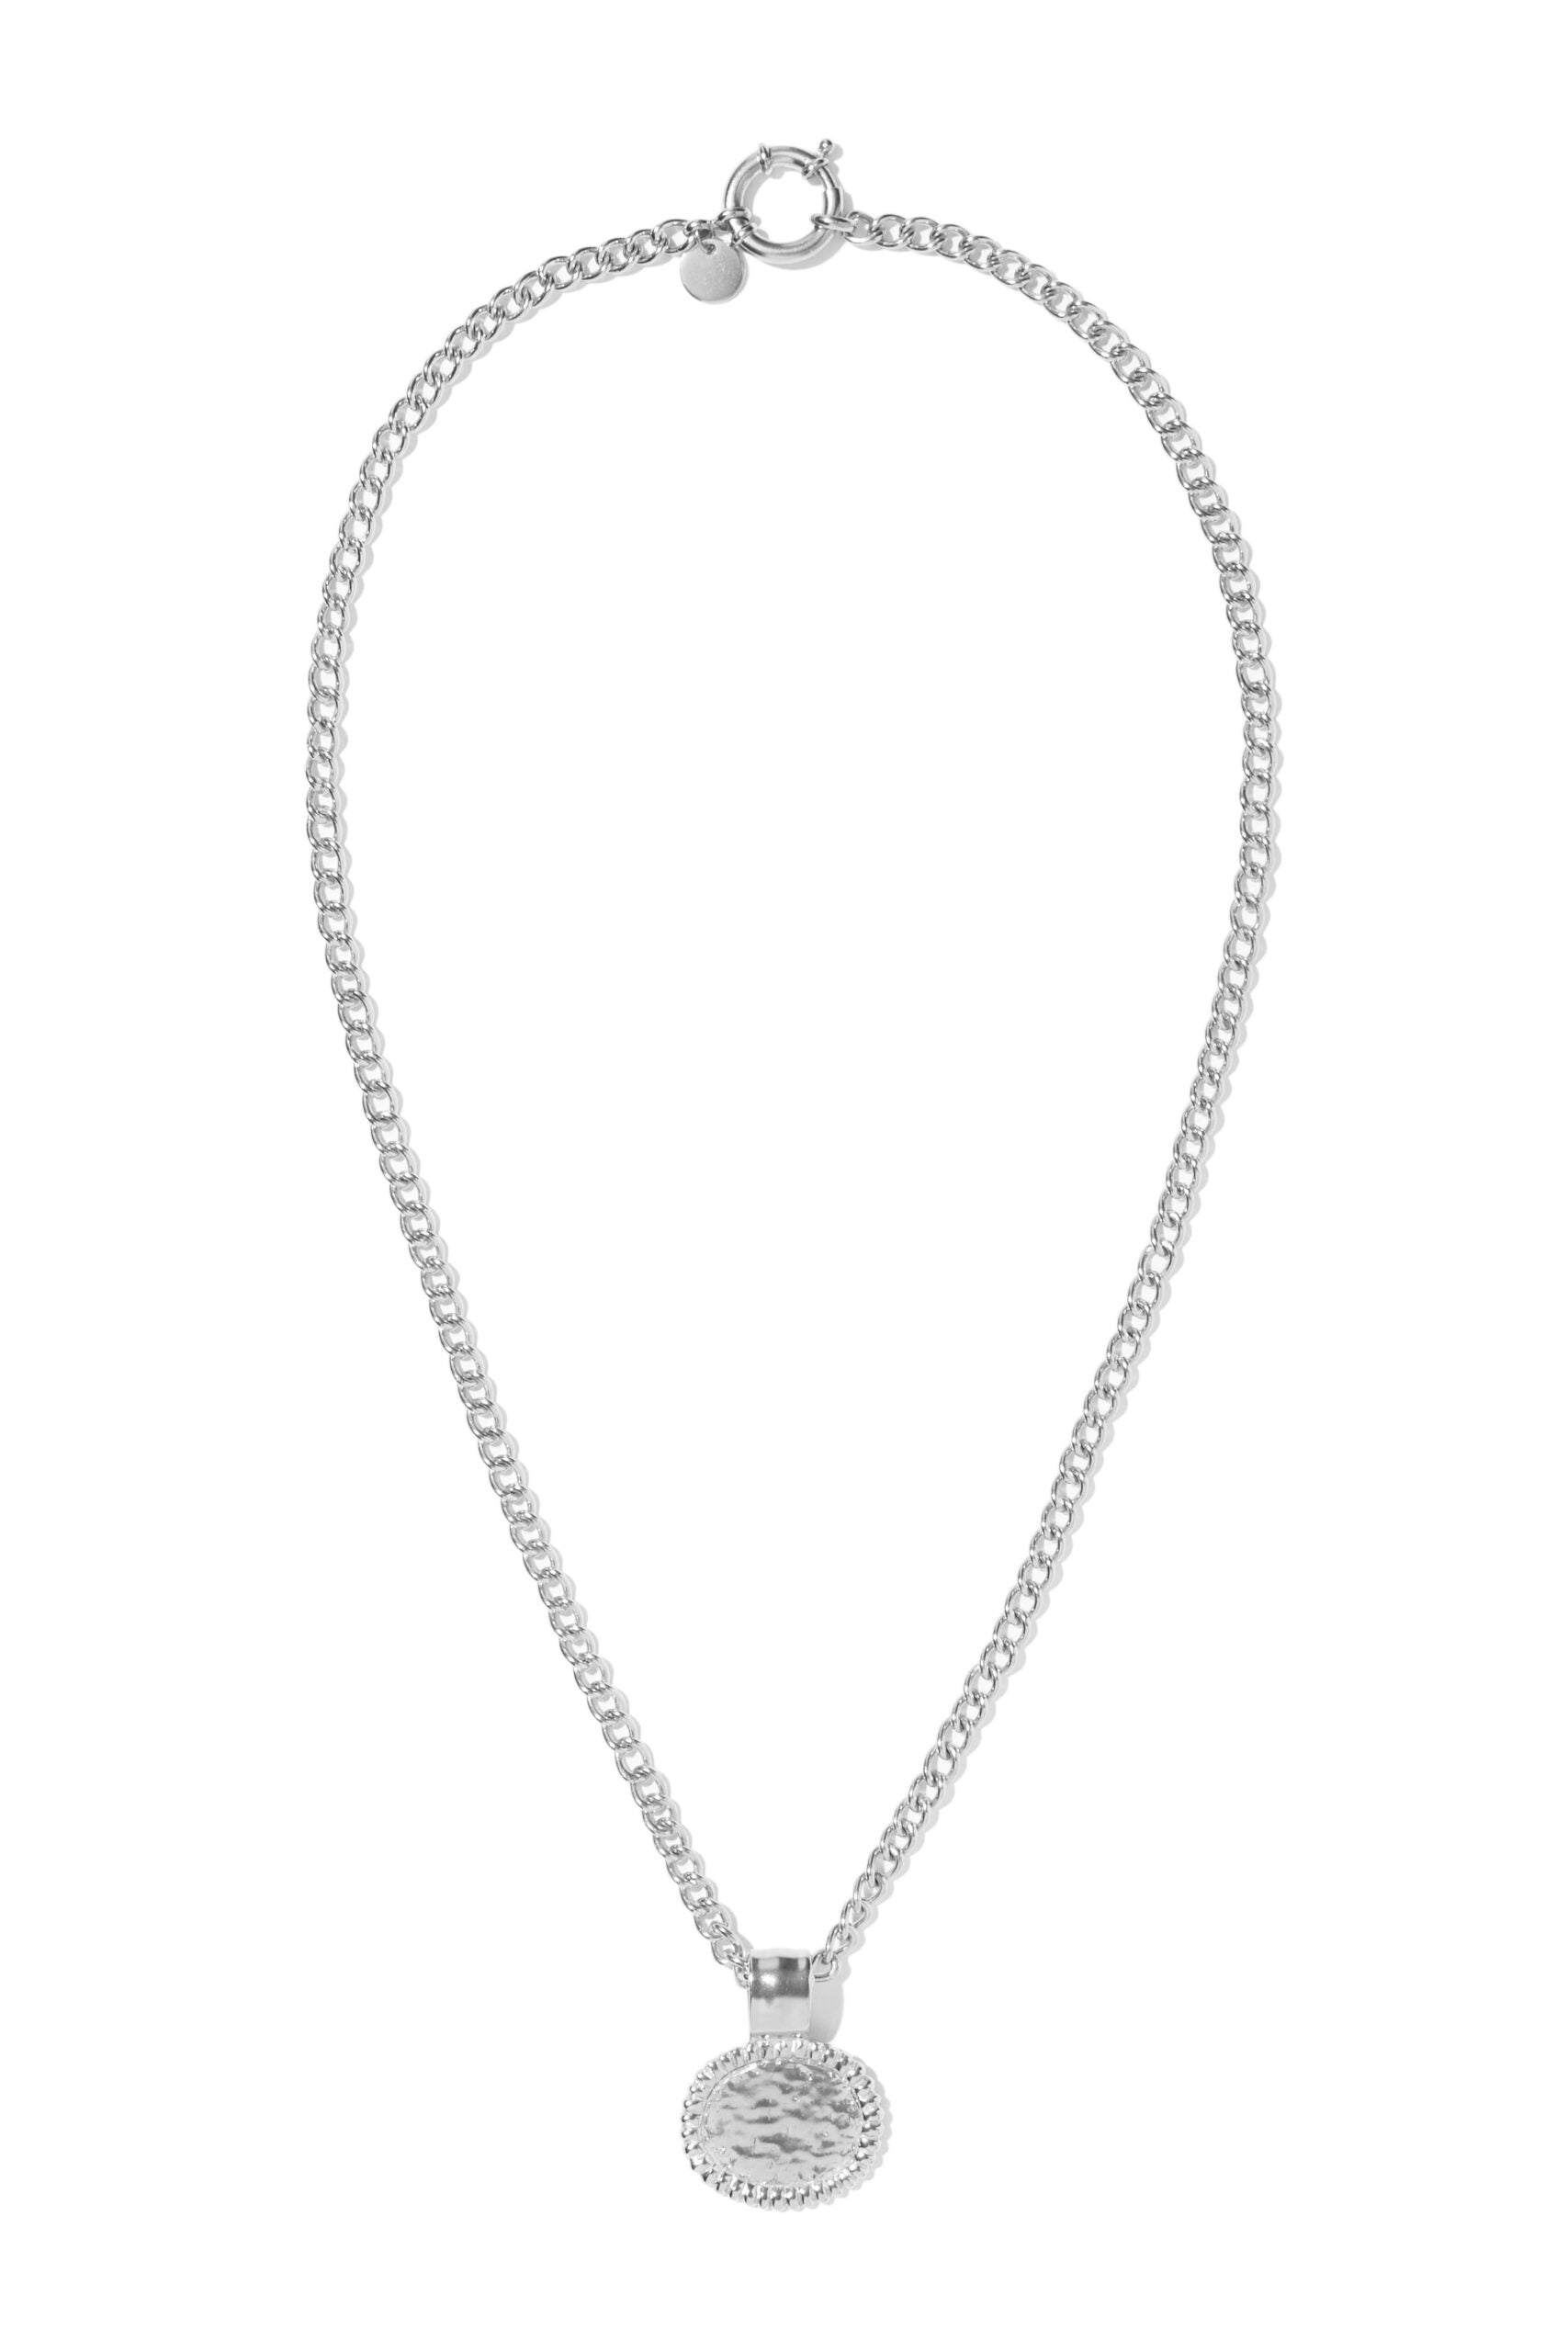 Lin necklace silver